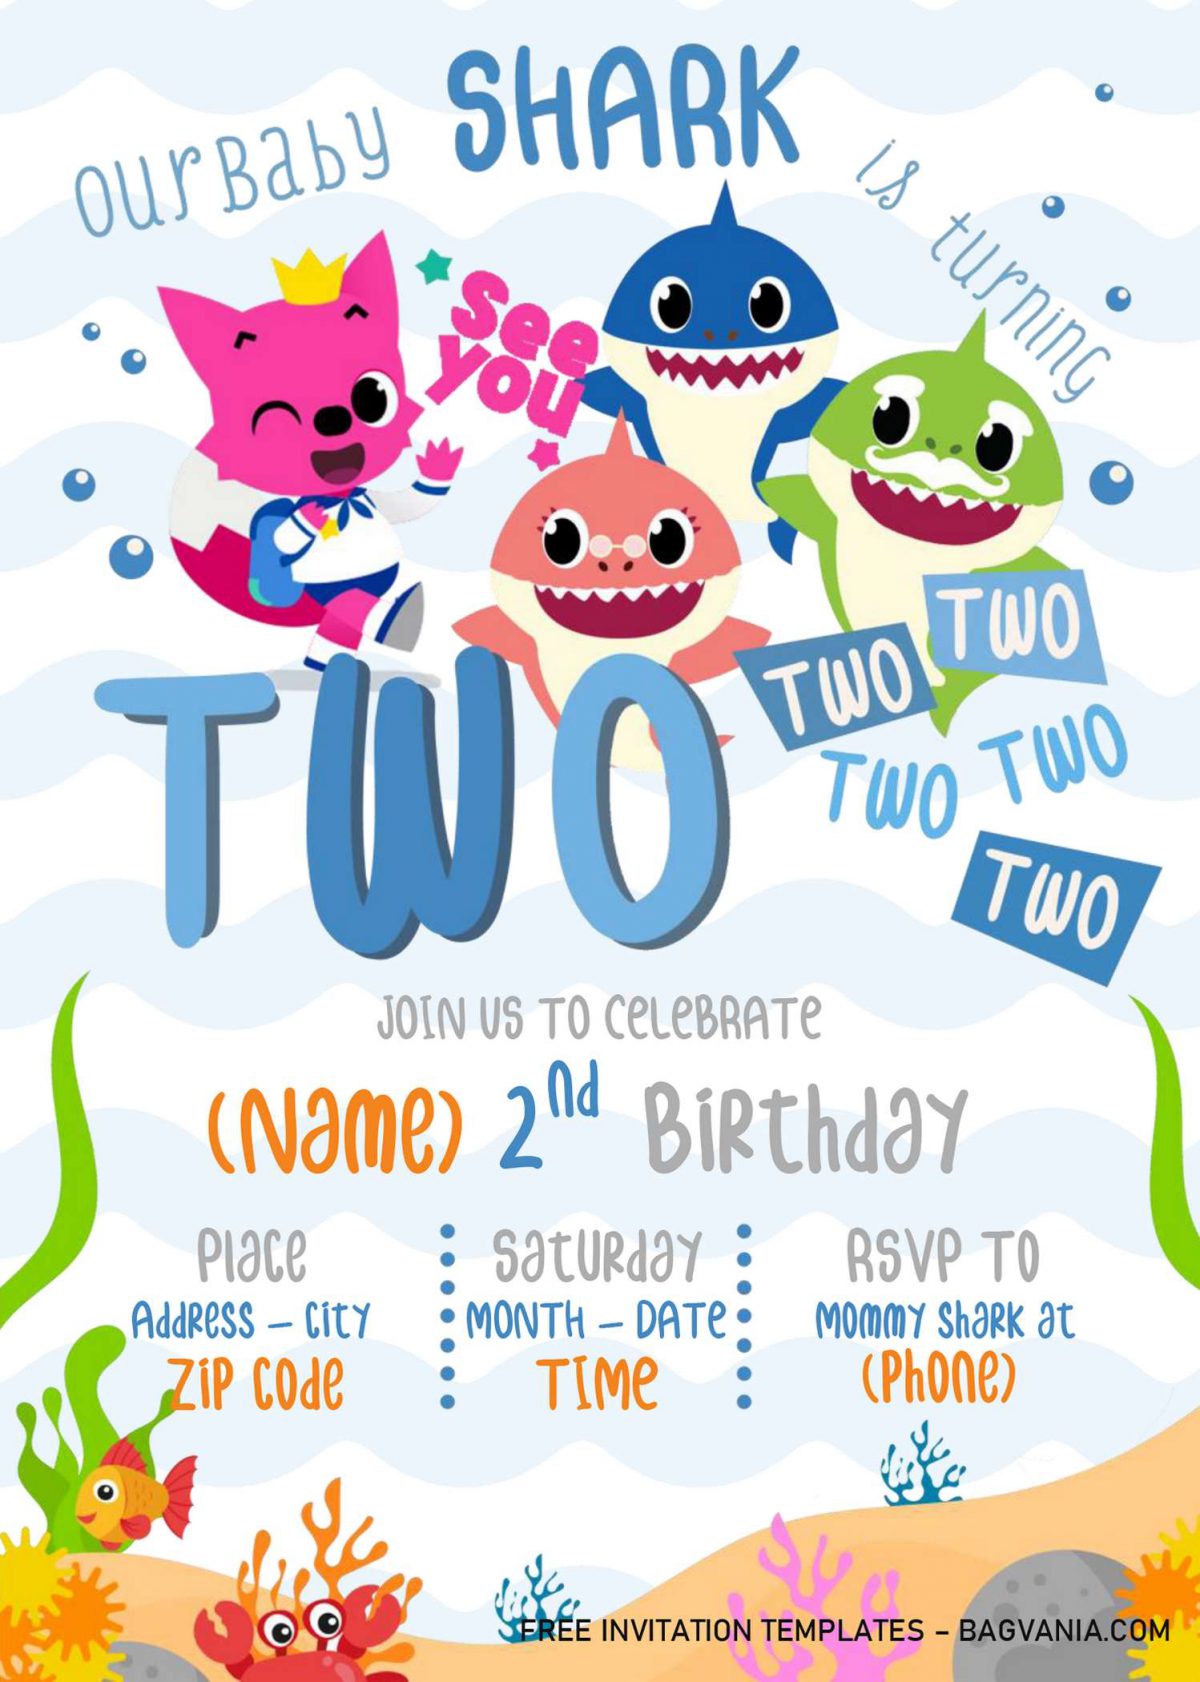 Baby Shark Birthday Invitation Templates - Editable With Microsoft Word and has baby shark family